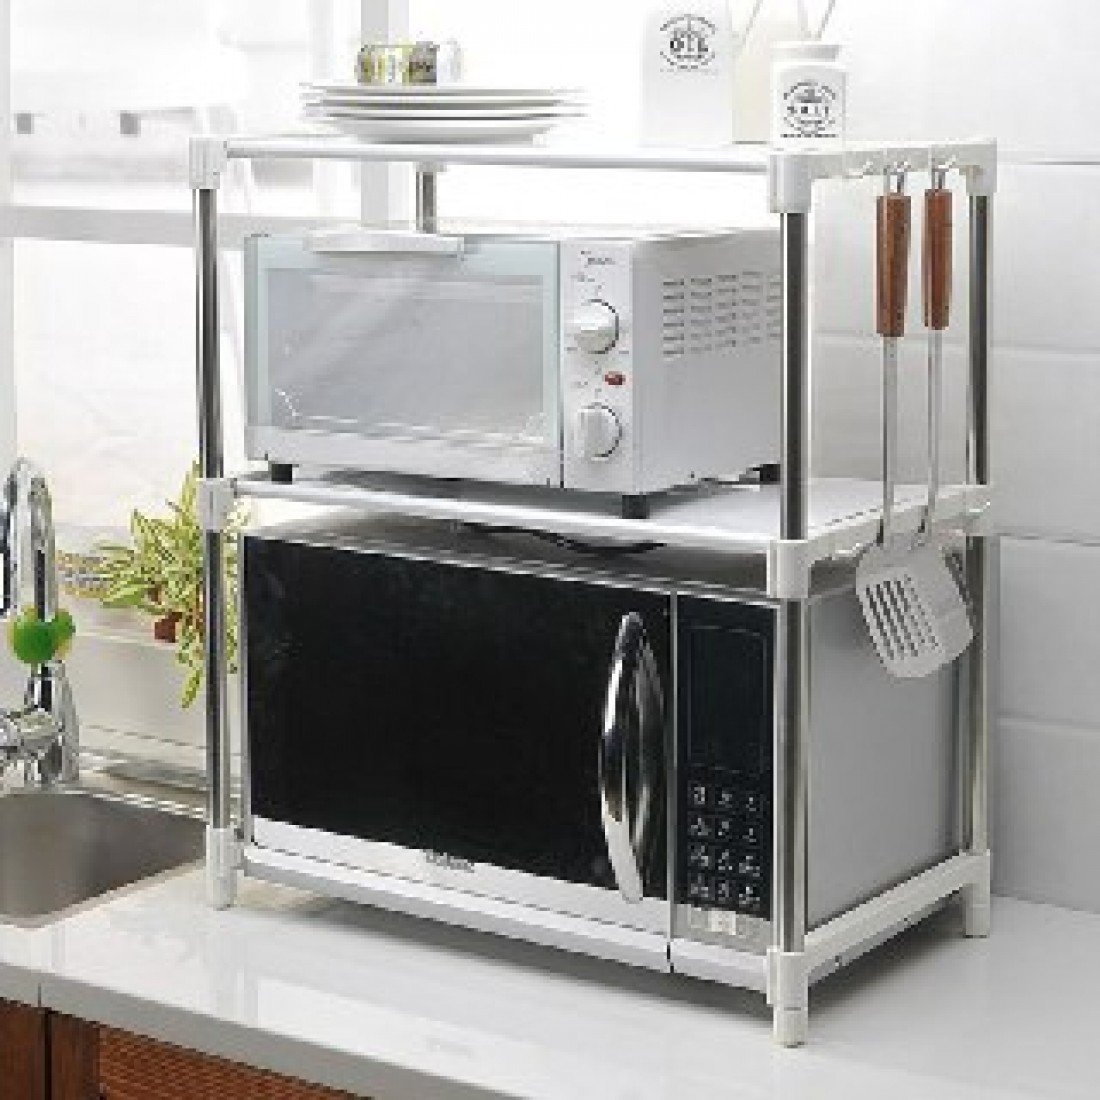 Этажерка для микроволновки на кухне (61 фото)